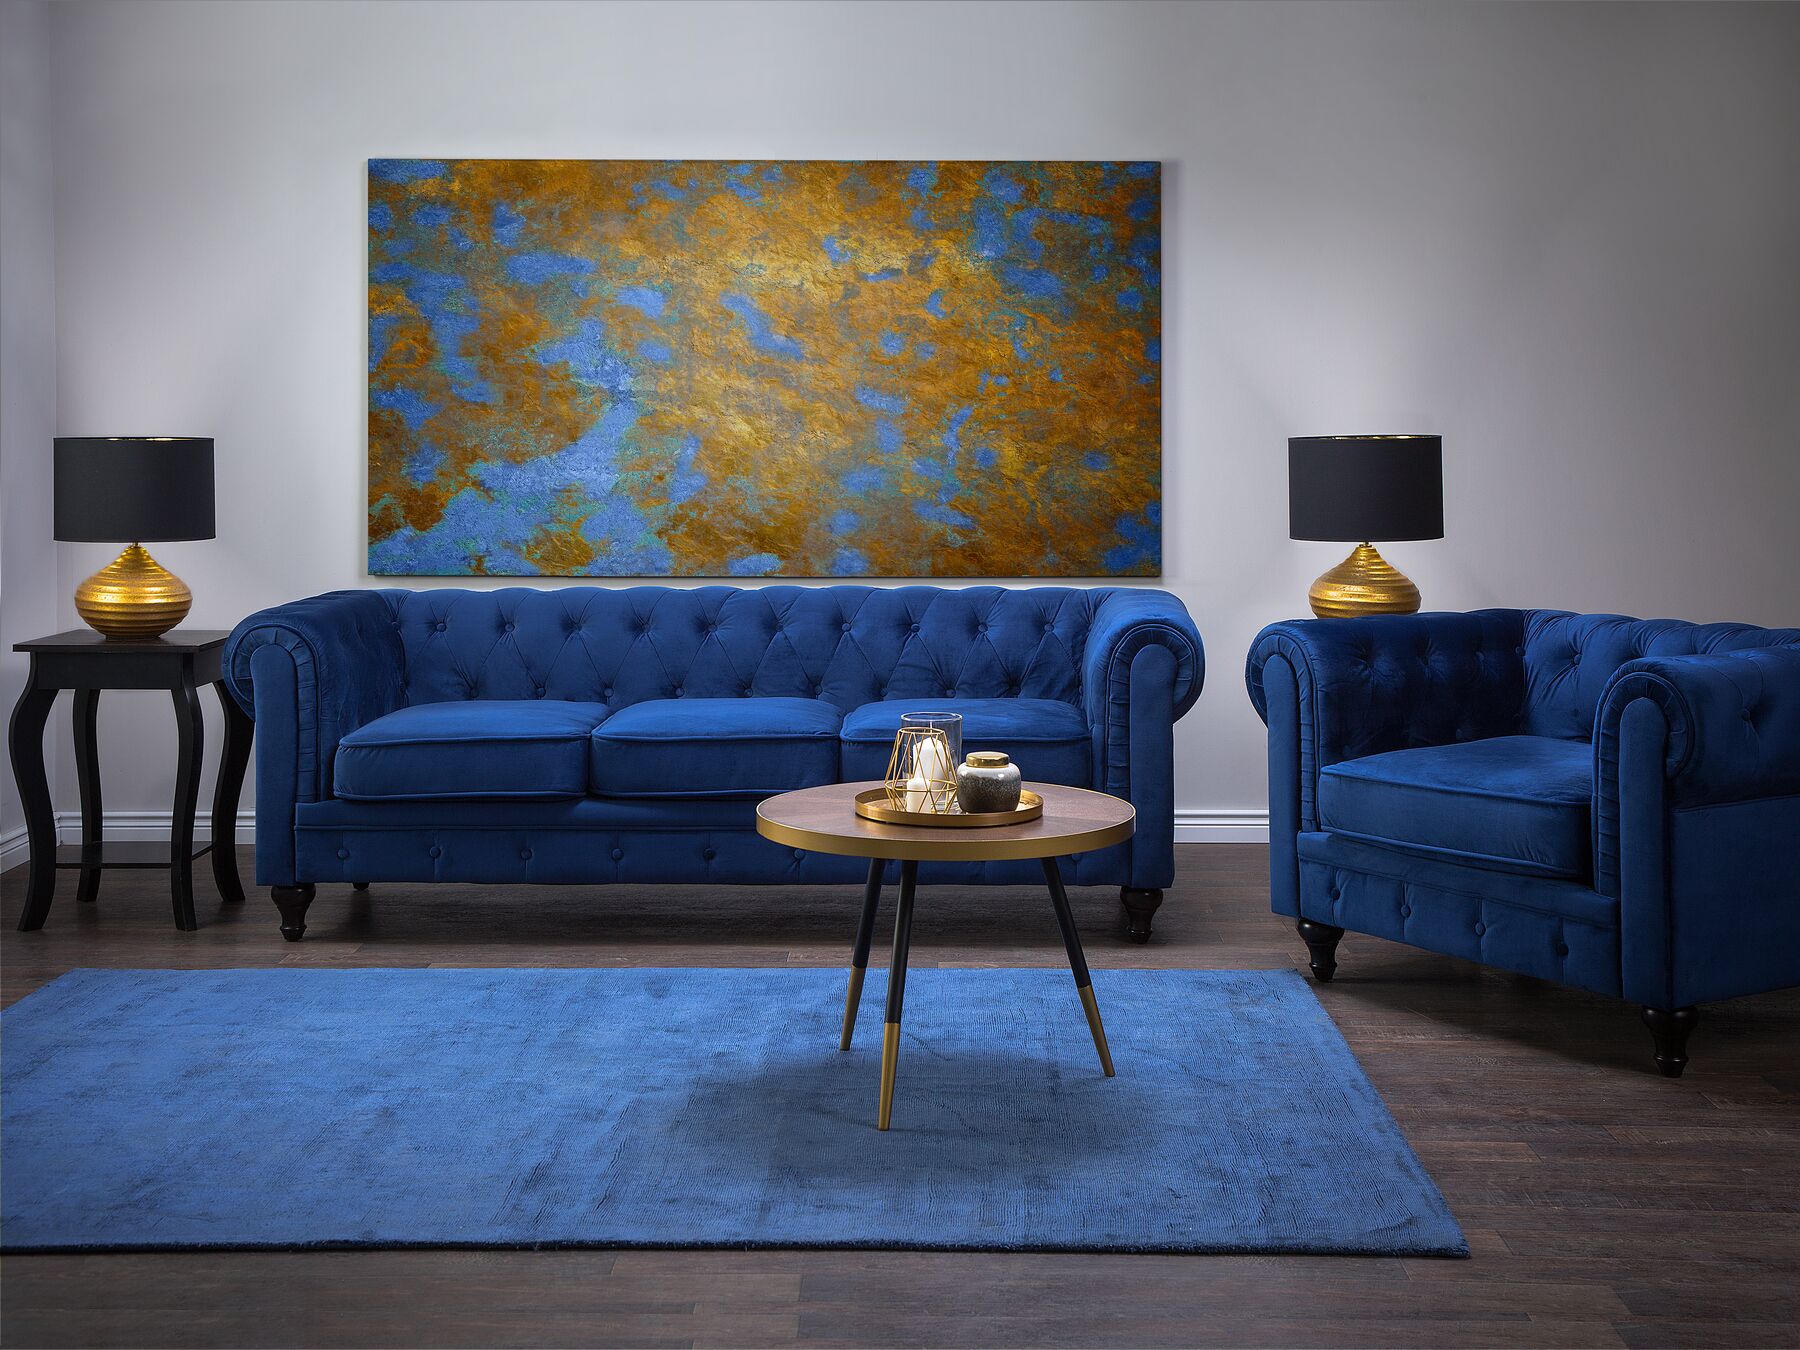 Chesterfield Upholstered Sofa (Blue)